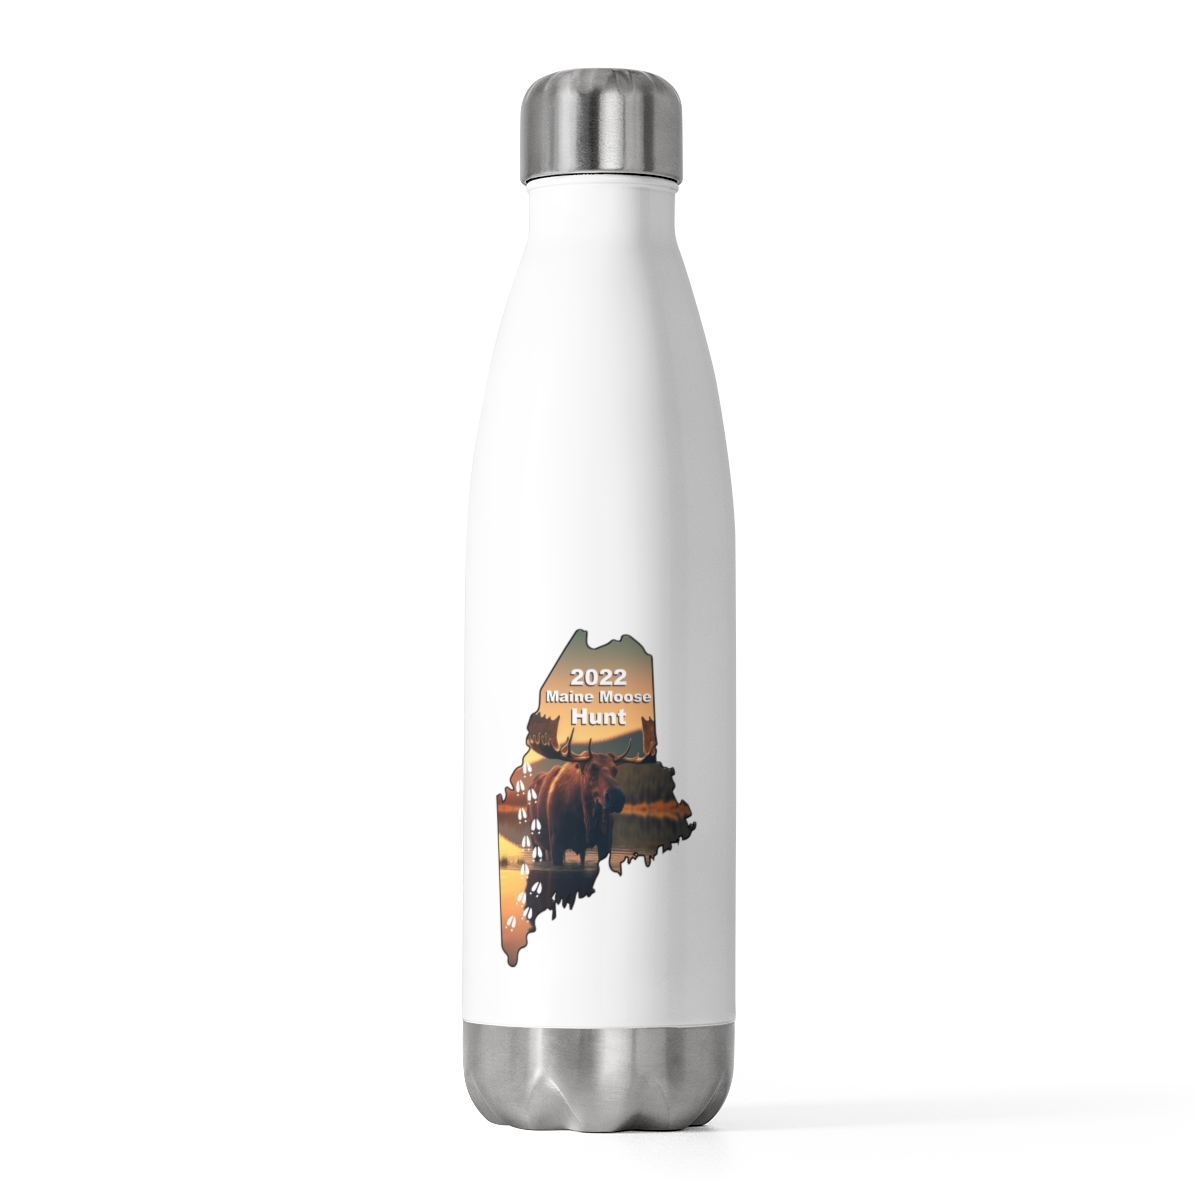 2022 - 20oz Insulated Bottle product thumbnail image